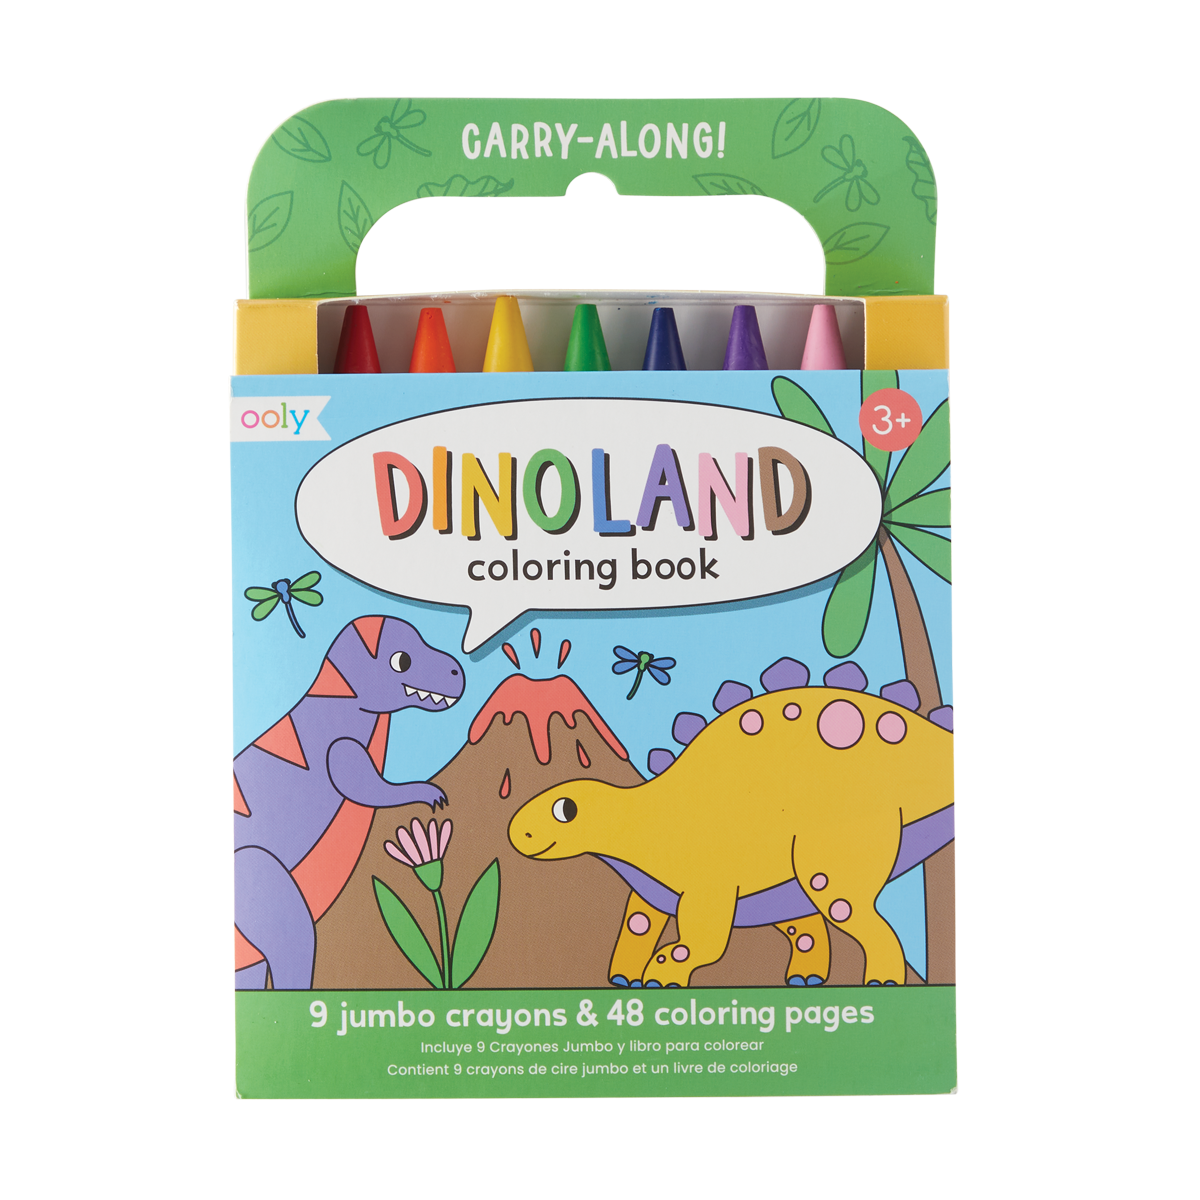 Craytastic! 12 Bulk Coloring Books for Kids Variety Assortment (5 x 7)  Dinosaur, Sports, Land & Ocean Themes